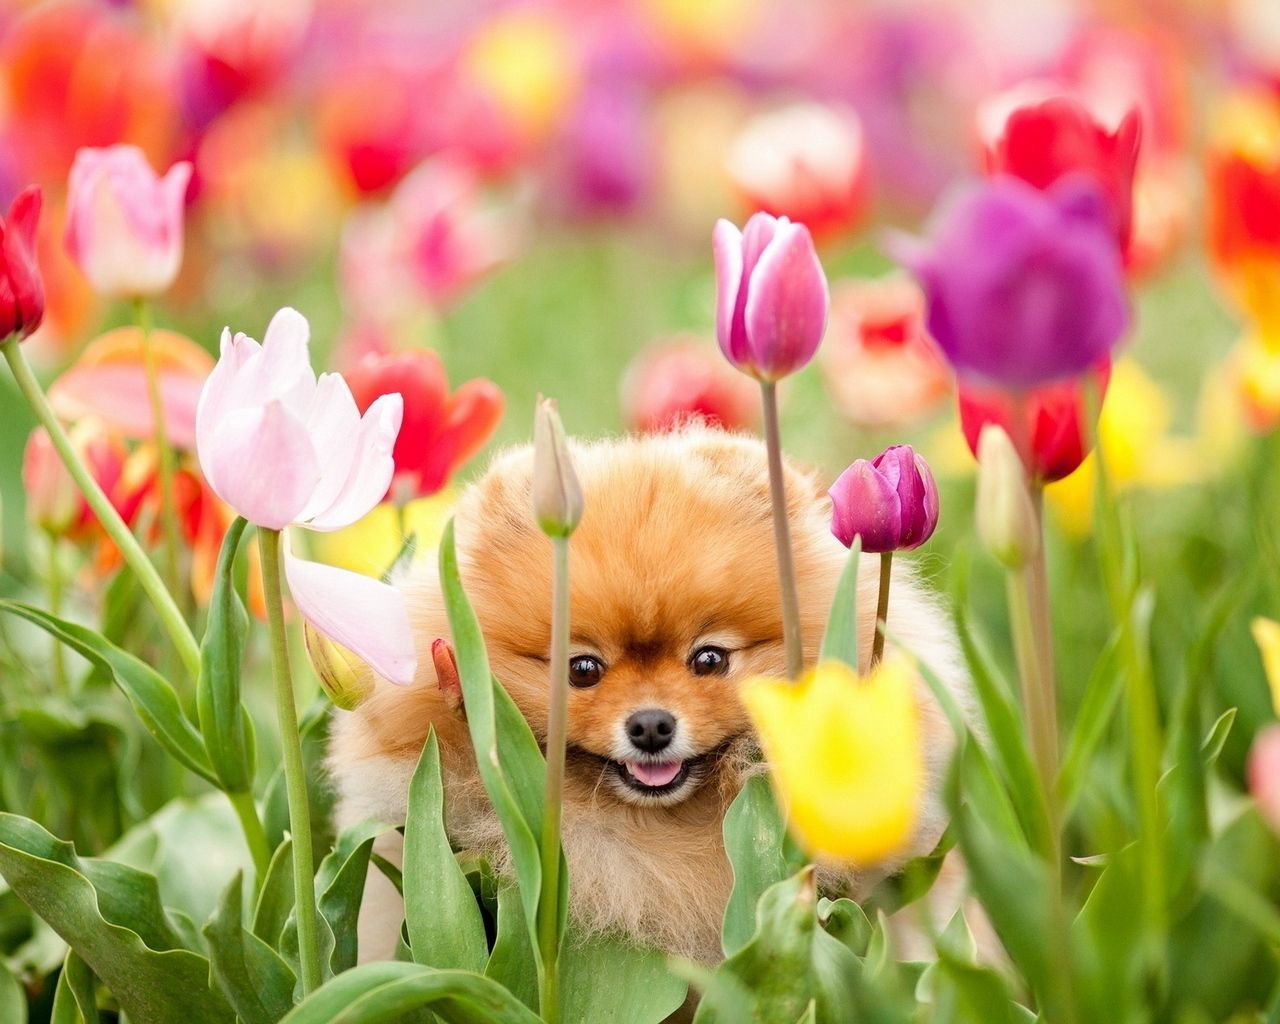 Download wallpaper 1280x1024 puppy, dog, field, flowers, tulips